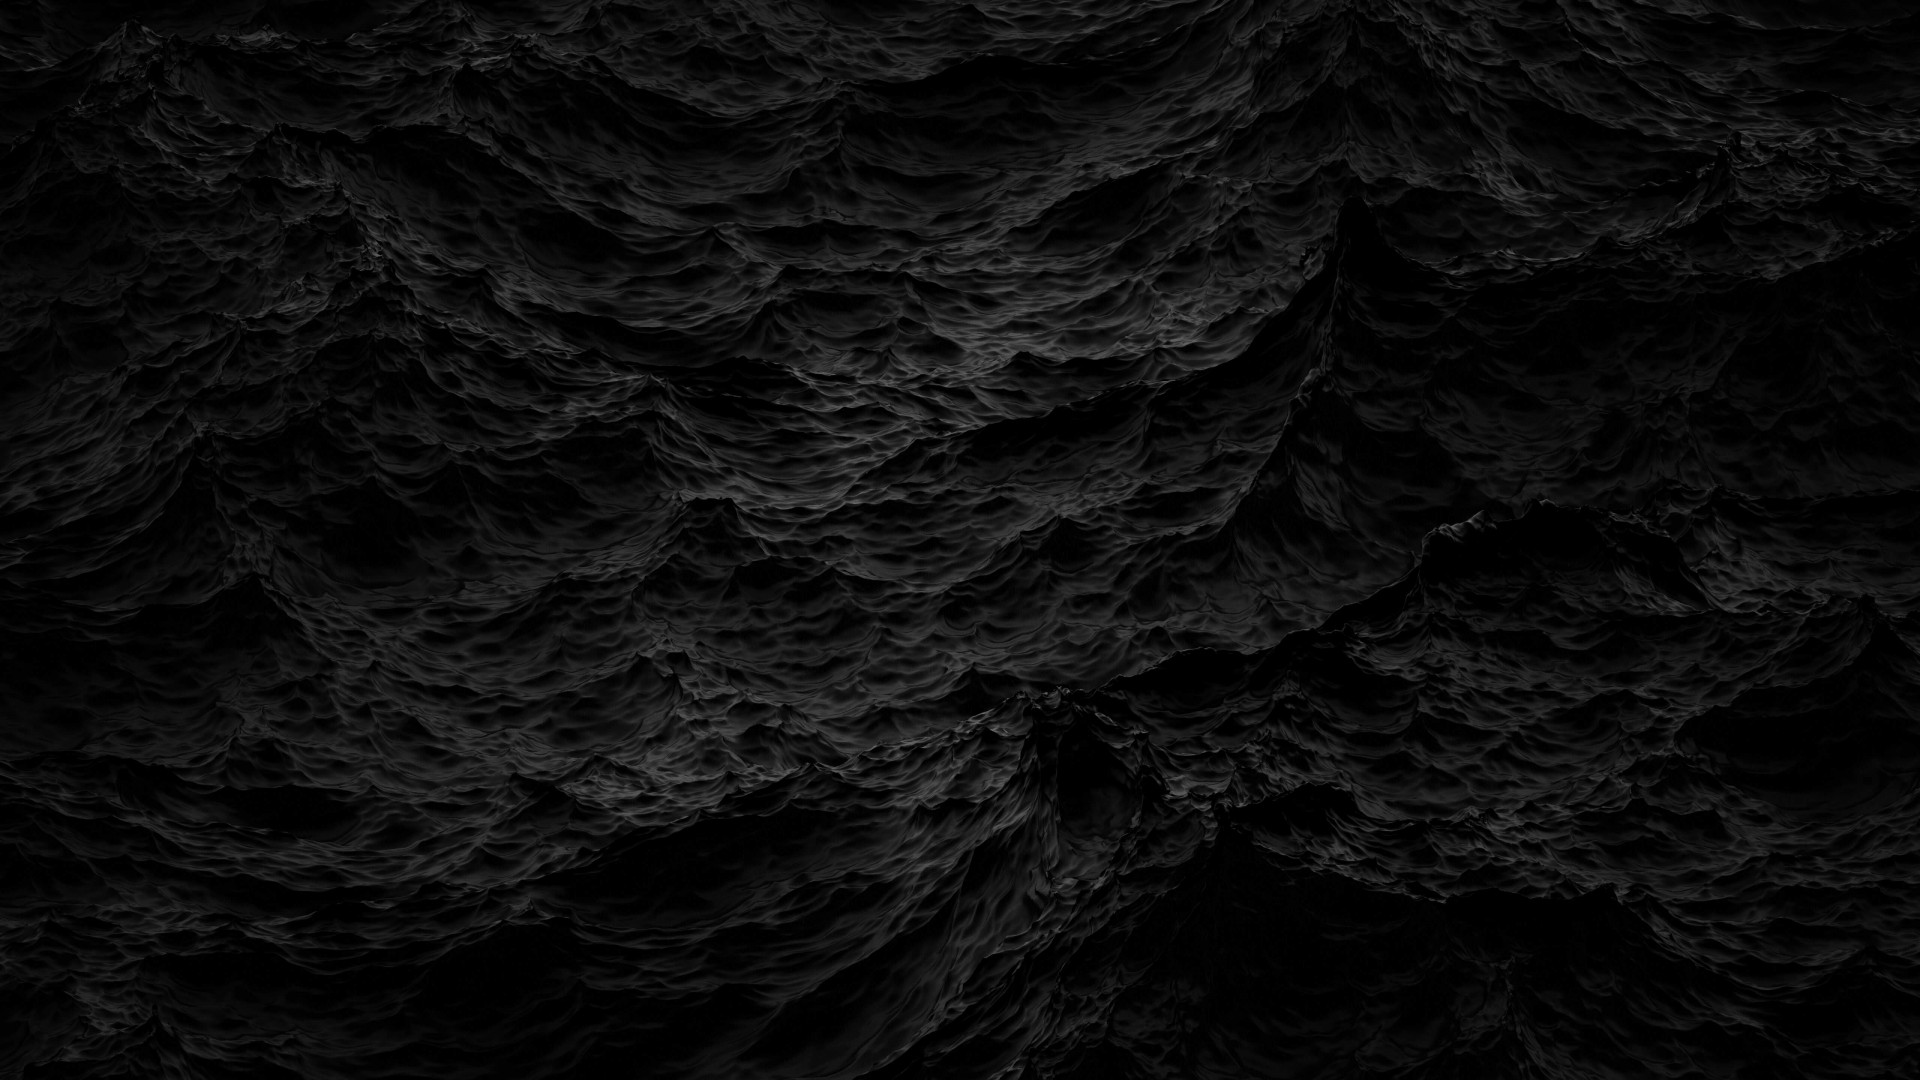 Black Waves Wallpaper for Desktop 1920x1080